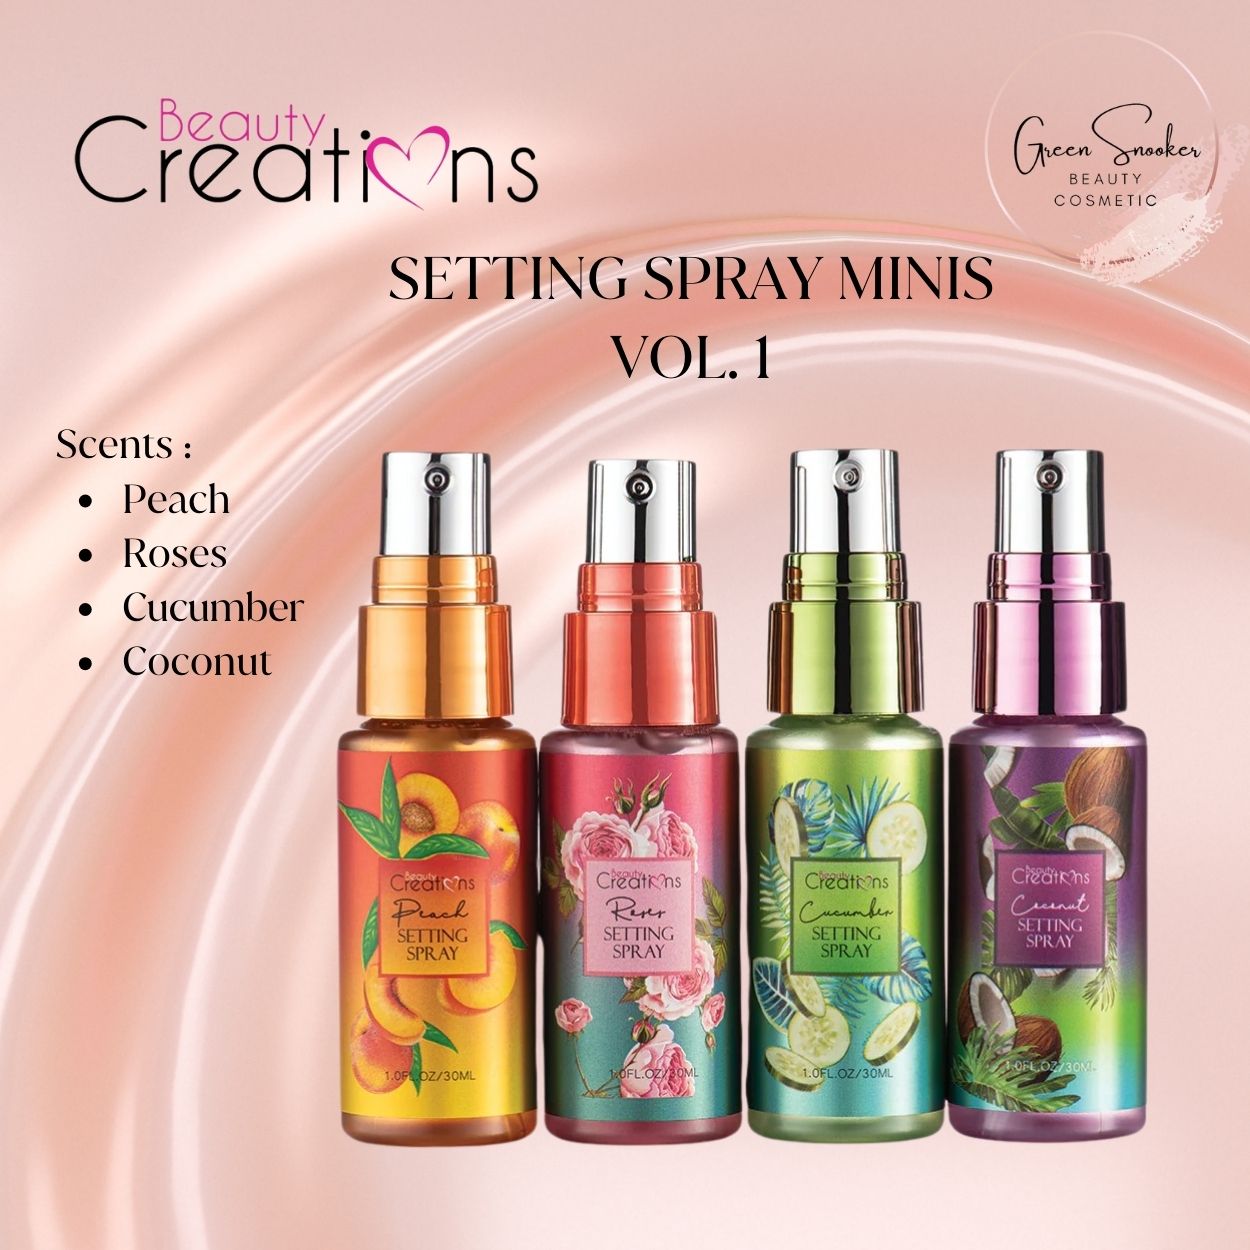 Beauty Creations, Setting Spray Minis Vol. 1